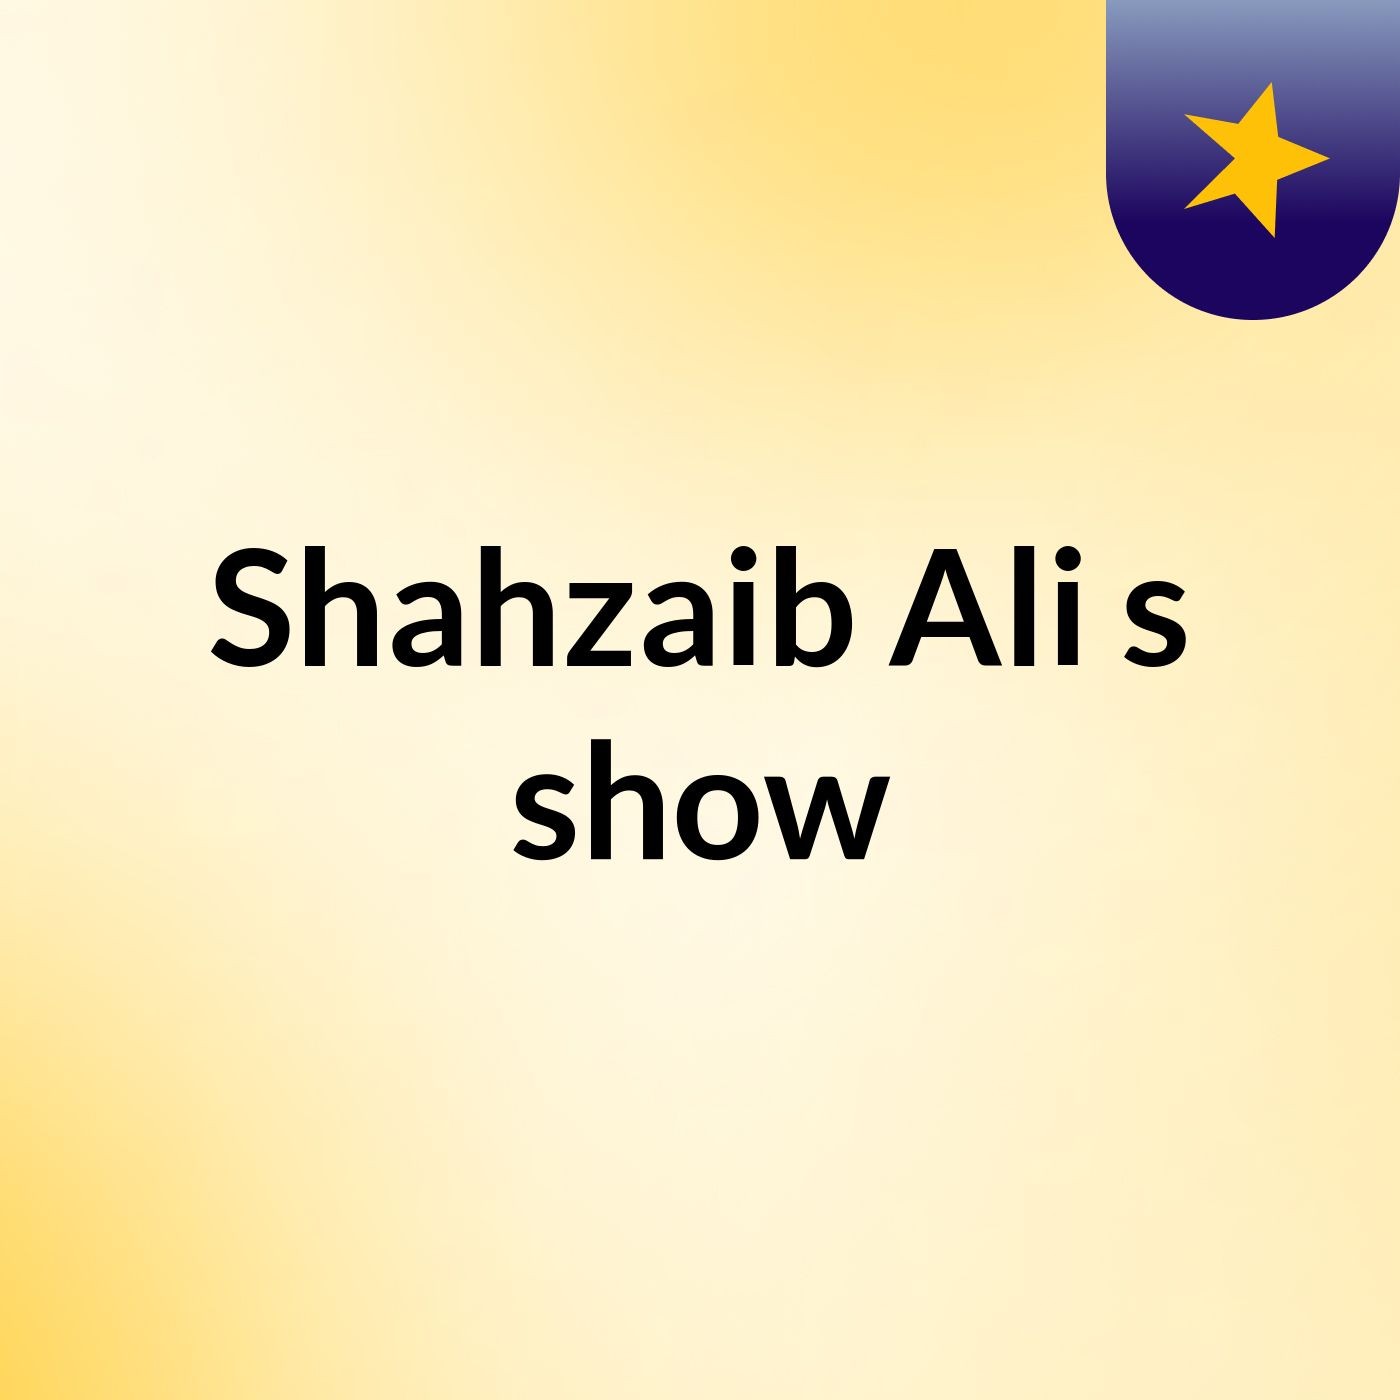 Shahzaib Ali's show